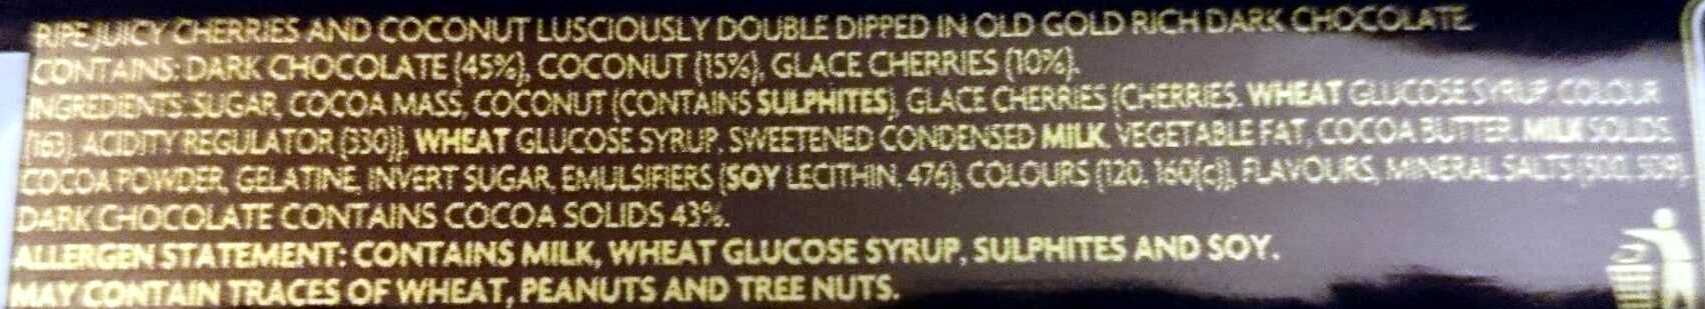 Cherry ripe - Ingredients